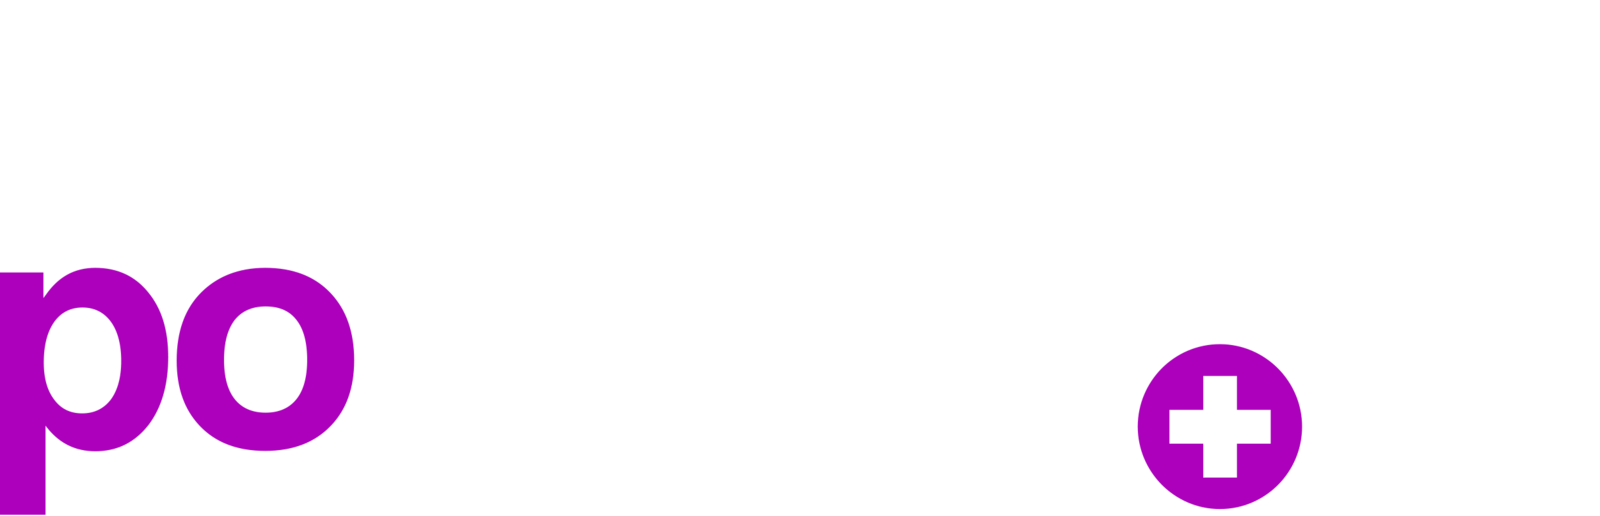 pourazucz-logo-jsme-partneri-barevne-na-tmave-pozadi-digital-rgb.png